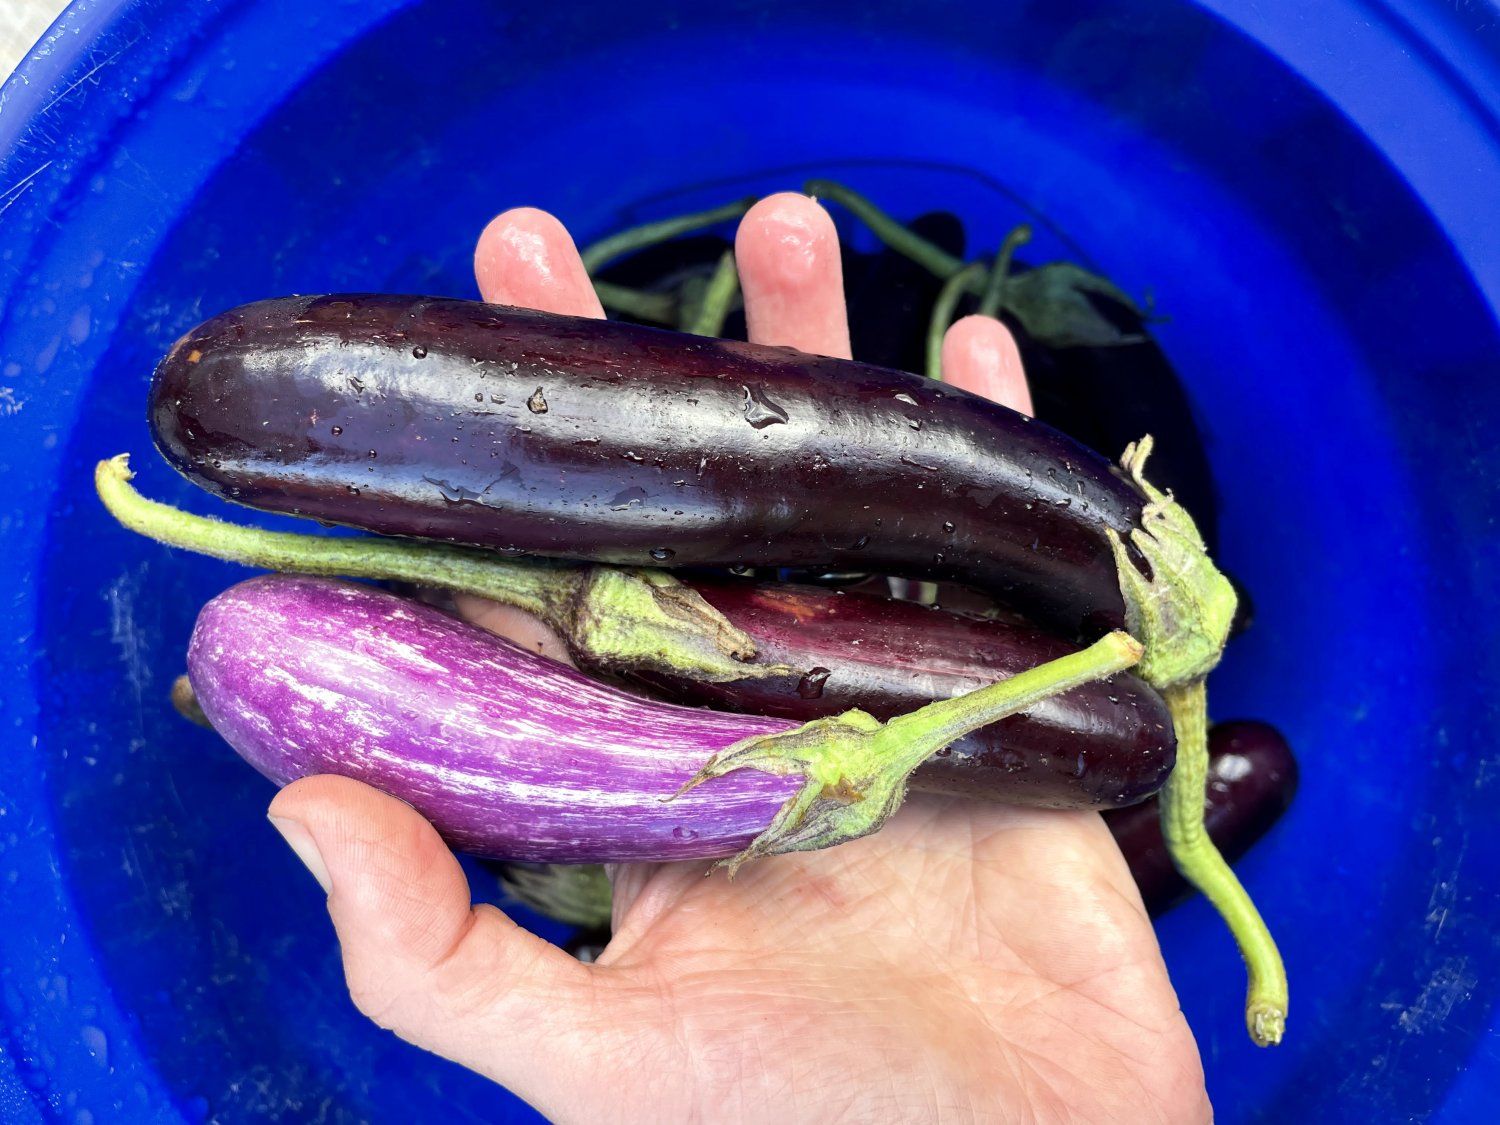 Next Happening: Eggplants R Us